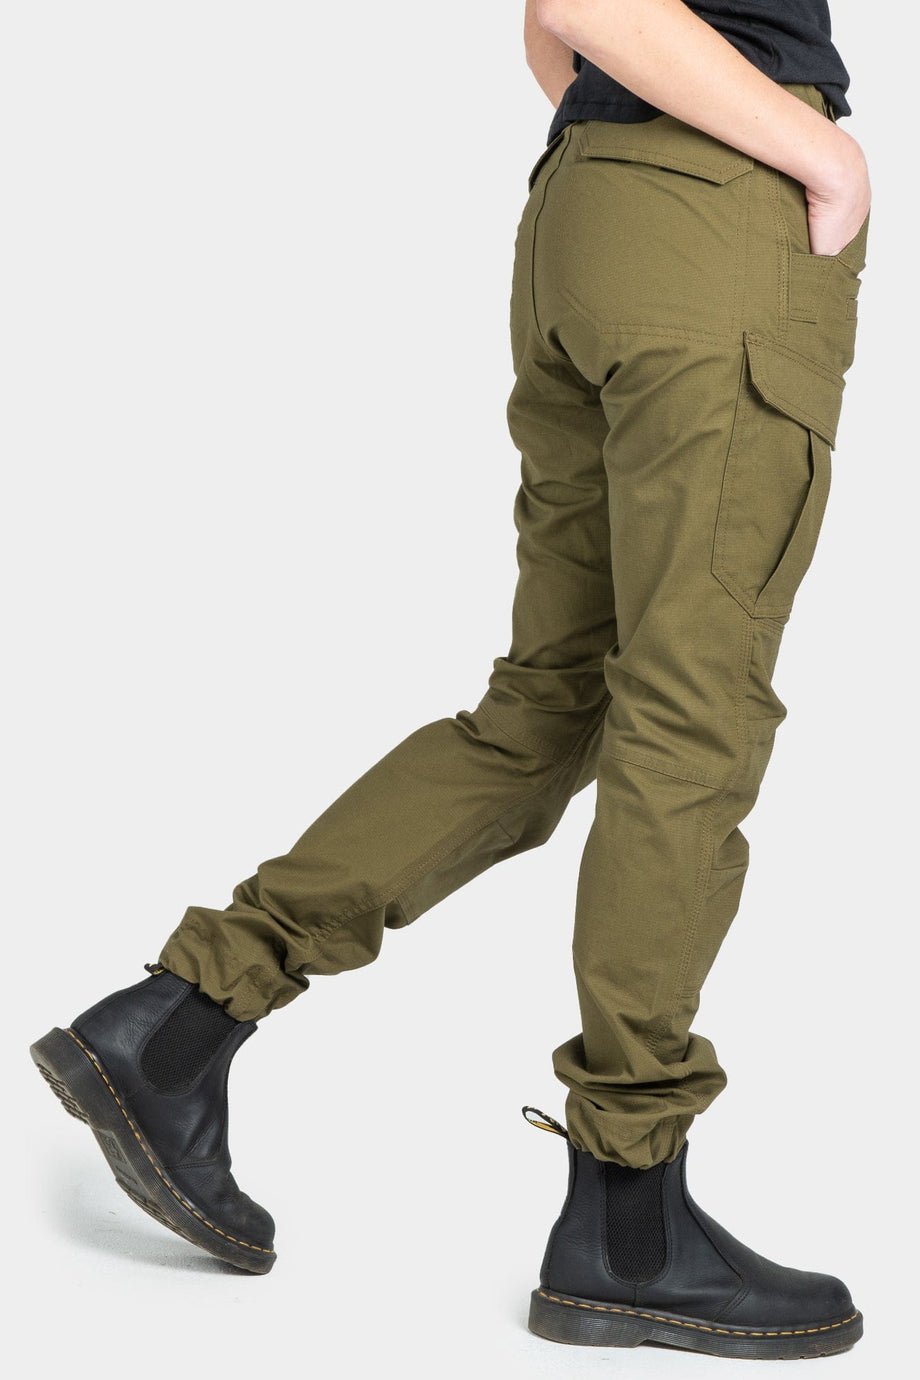 Hard Yakka Women's Generation Y Cotton Drill Cargo Pants (Y08850) – Budget Workwear  New Zealand Store